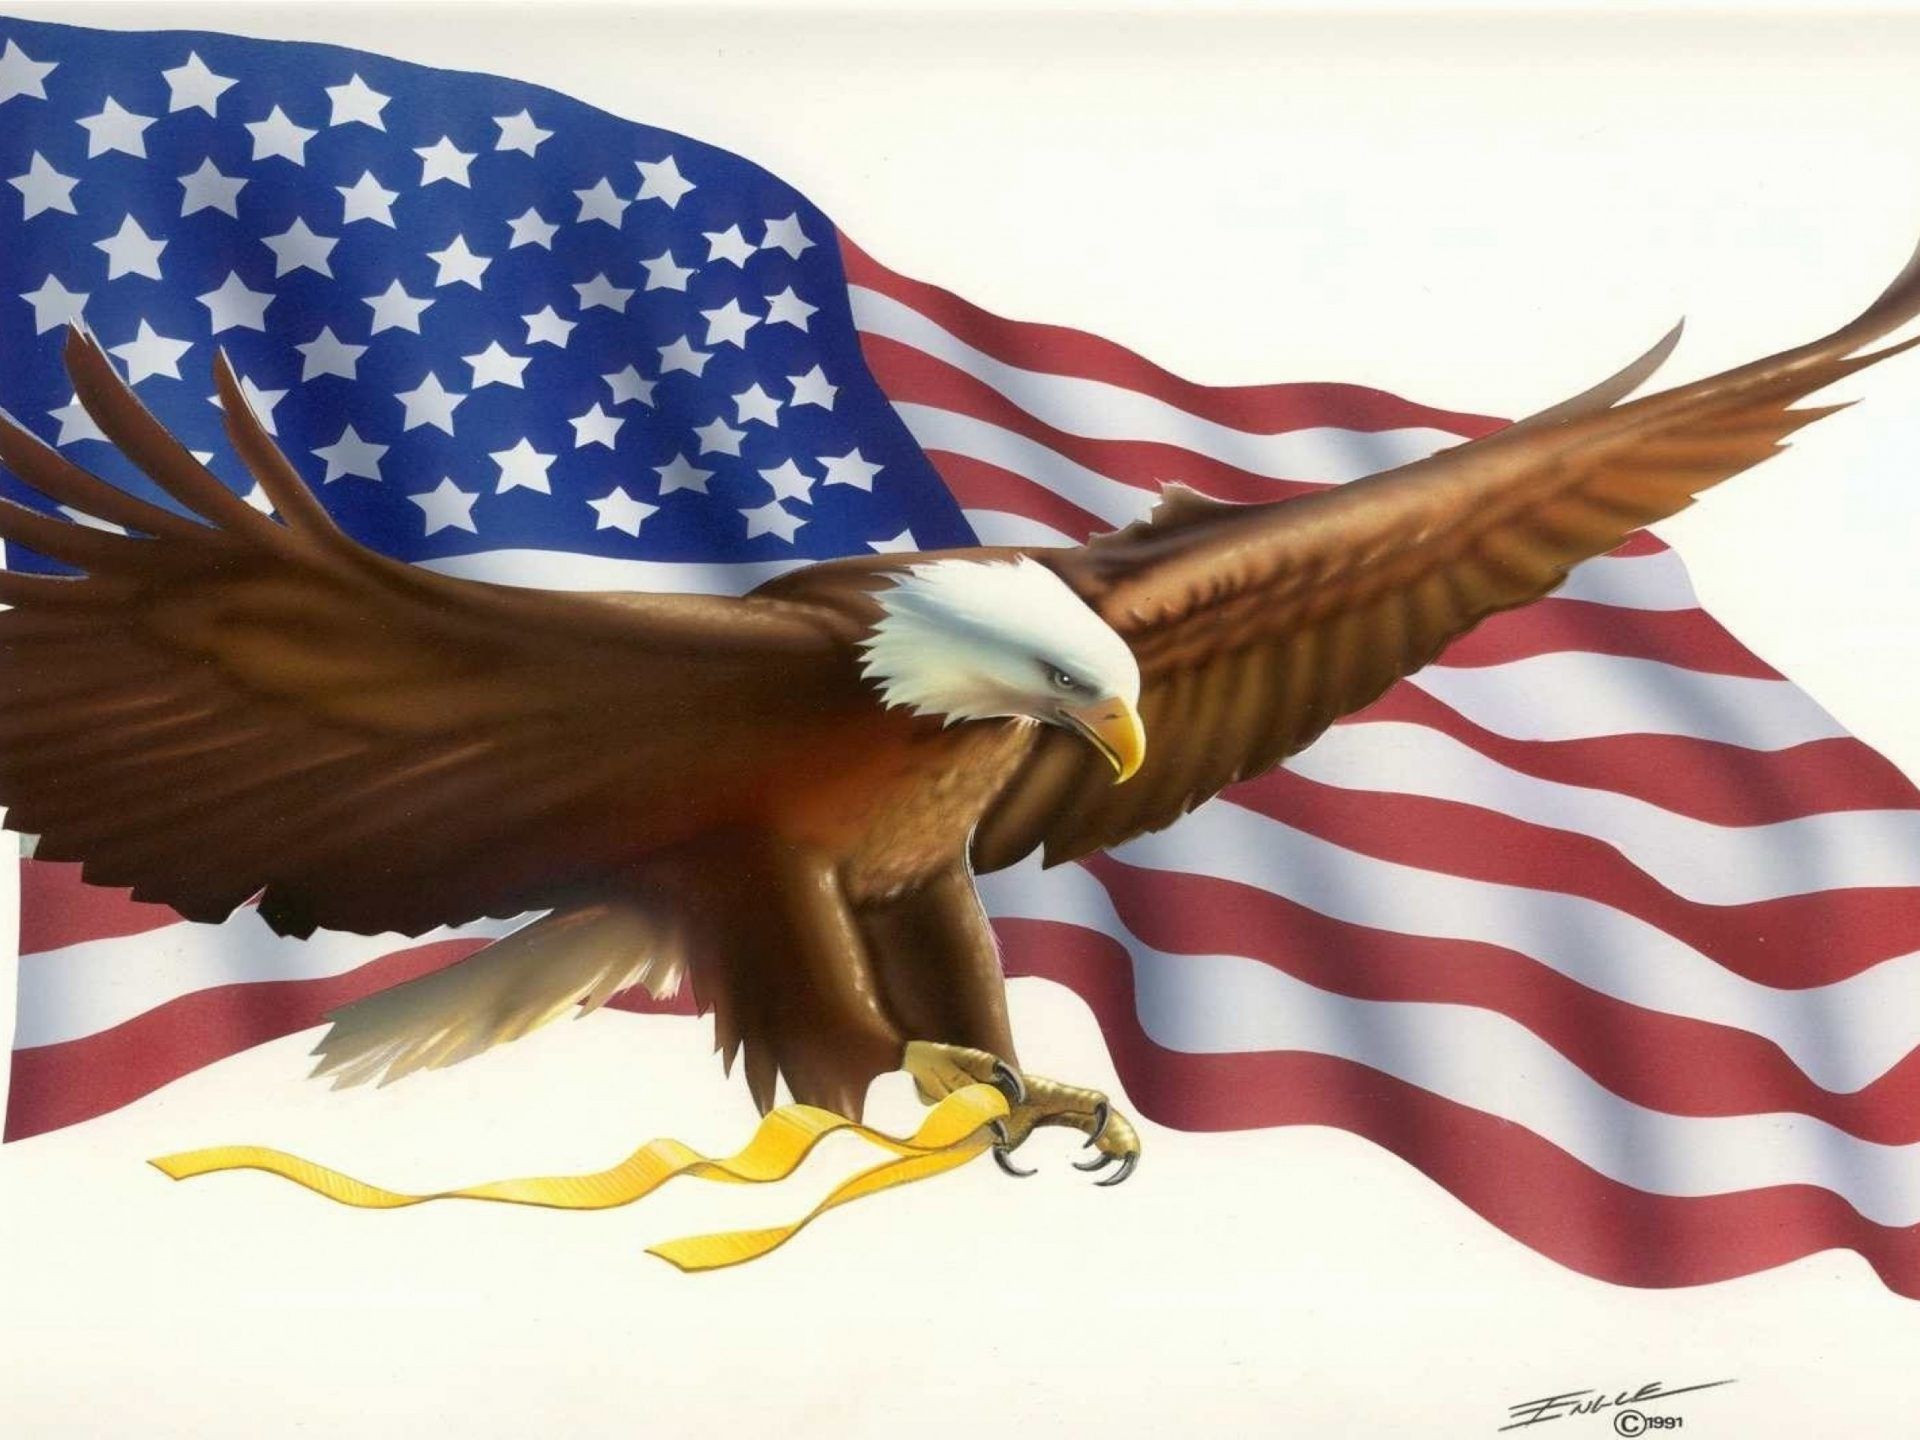 American Flag Bald Eagle Symbols Desktop Wallpaper HD For Mobile Phones And Laptops, Wallpaper13.com